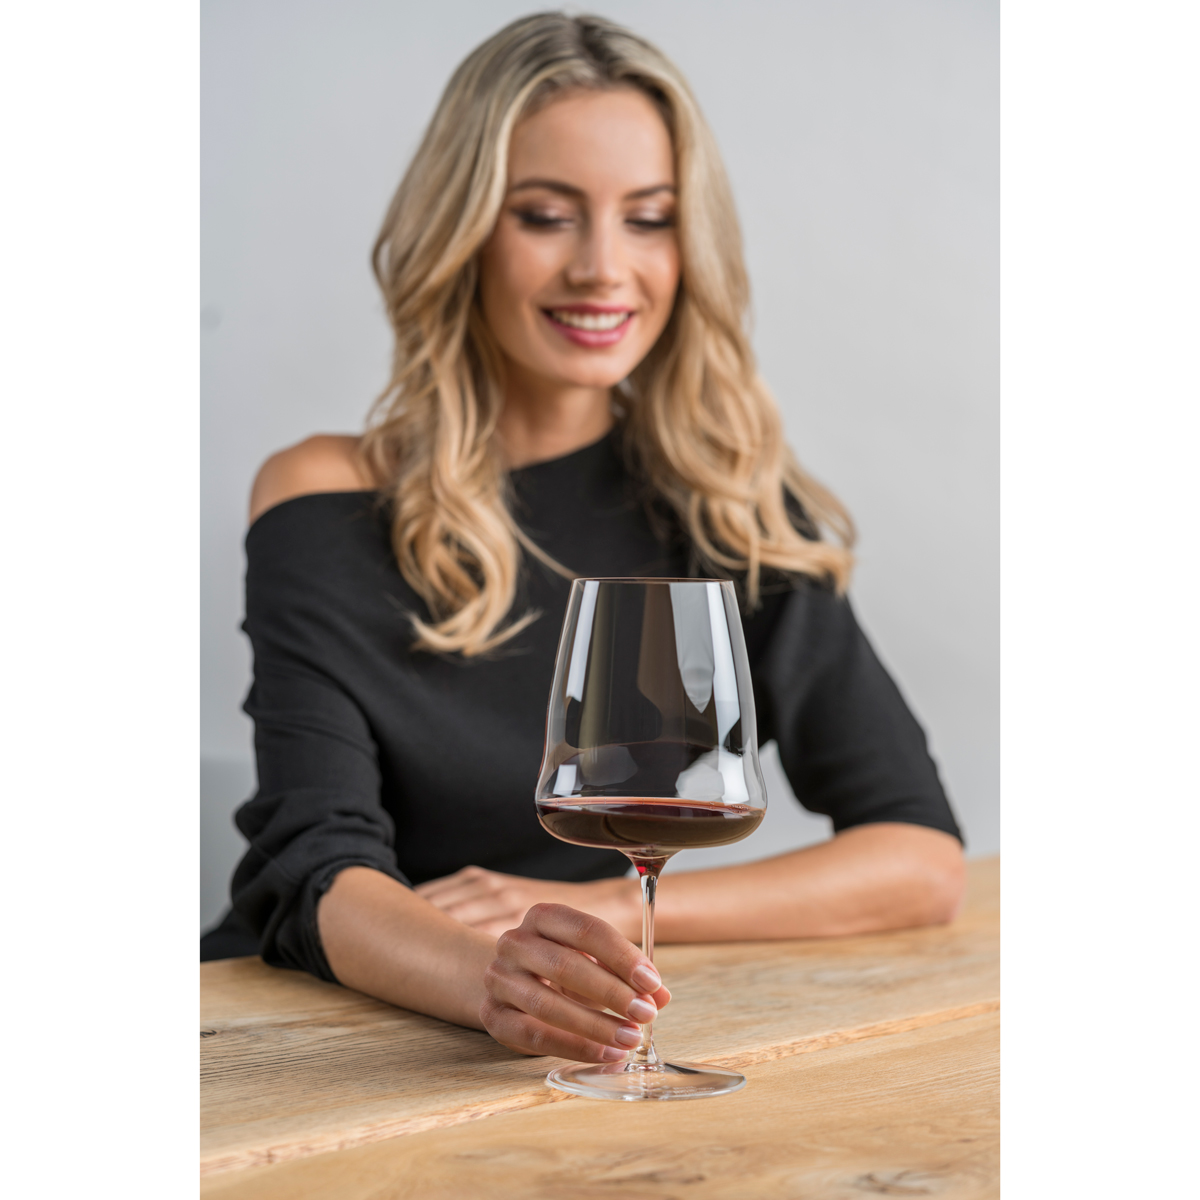 Riedel Vinum Dishwasher Safe Cabernet Sauvignon/Merlot Wine Glasses, 8 Pack  